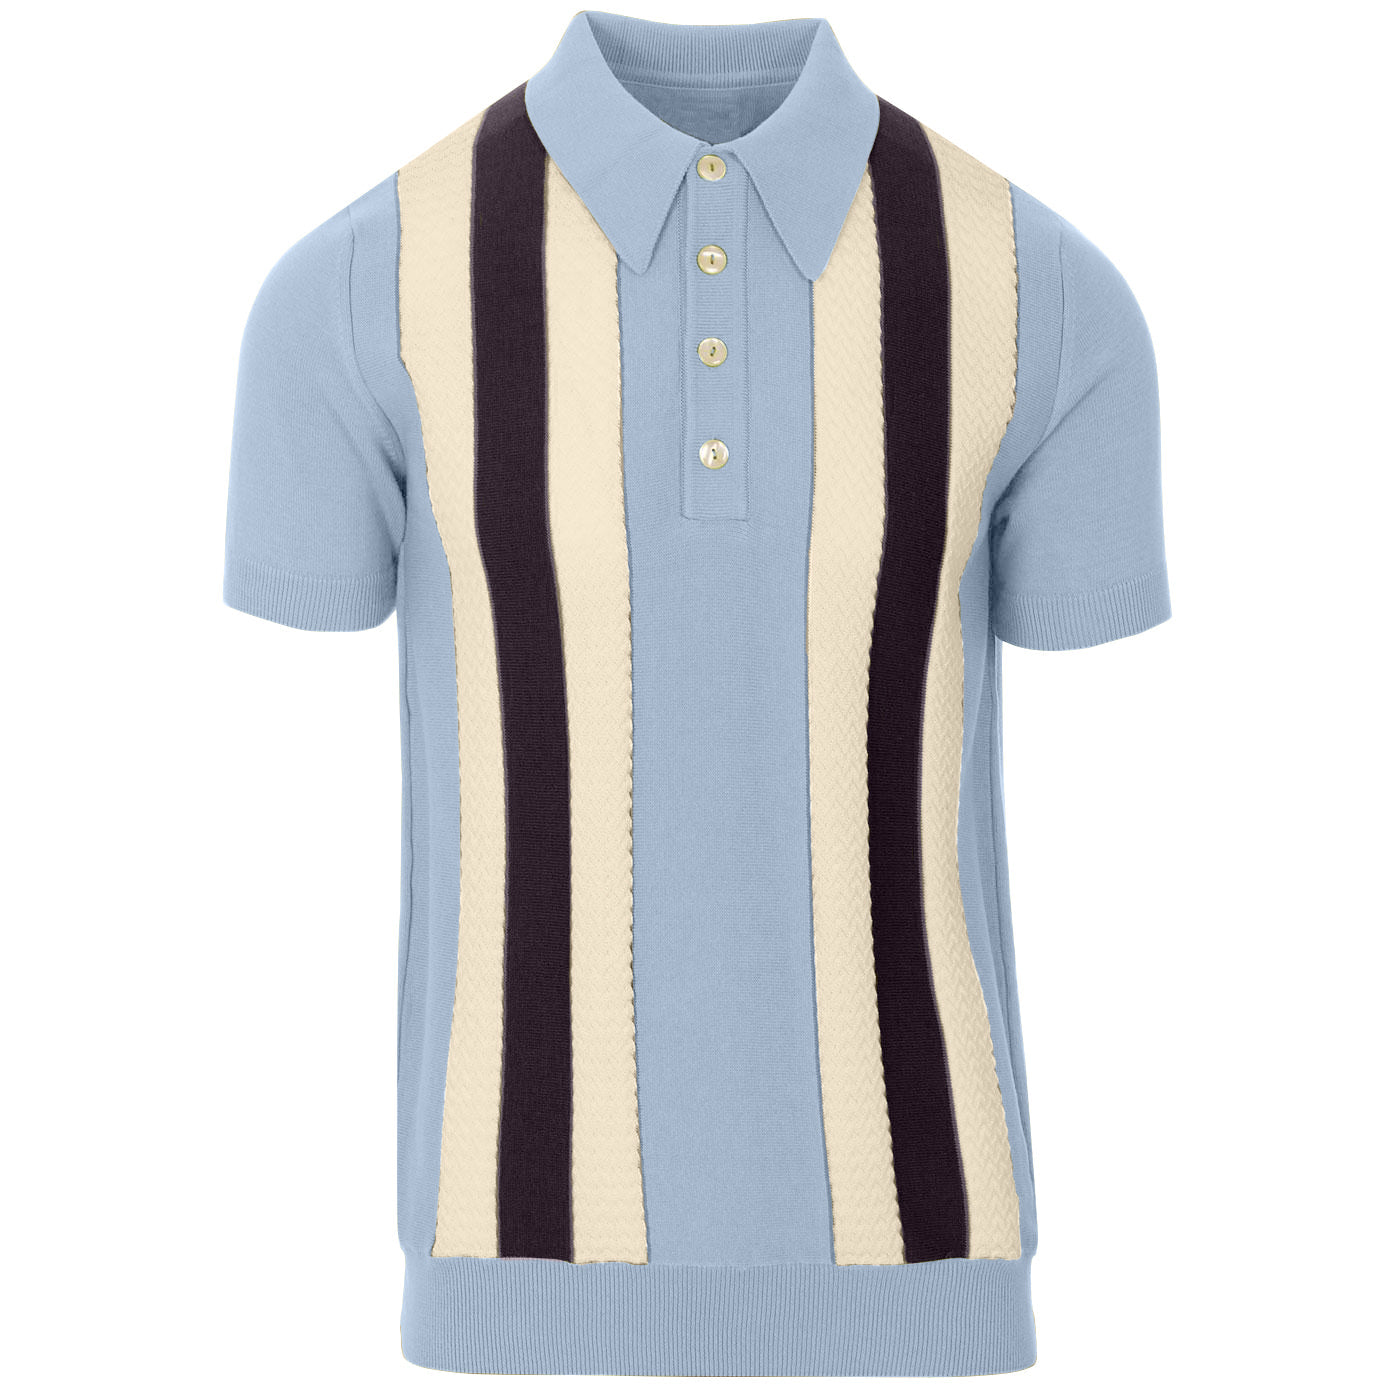 OXKNIT Men Vintage Clothing 1960s Mod Style Casual Stripe Blue Knit Retro  Polo – OXKnit | Cardigans